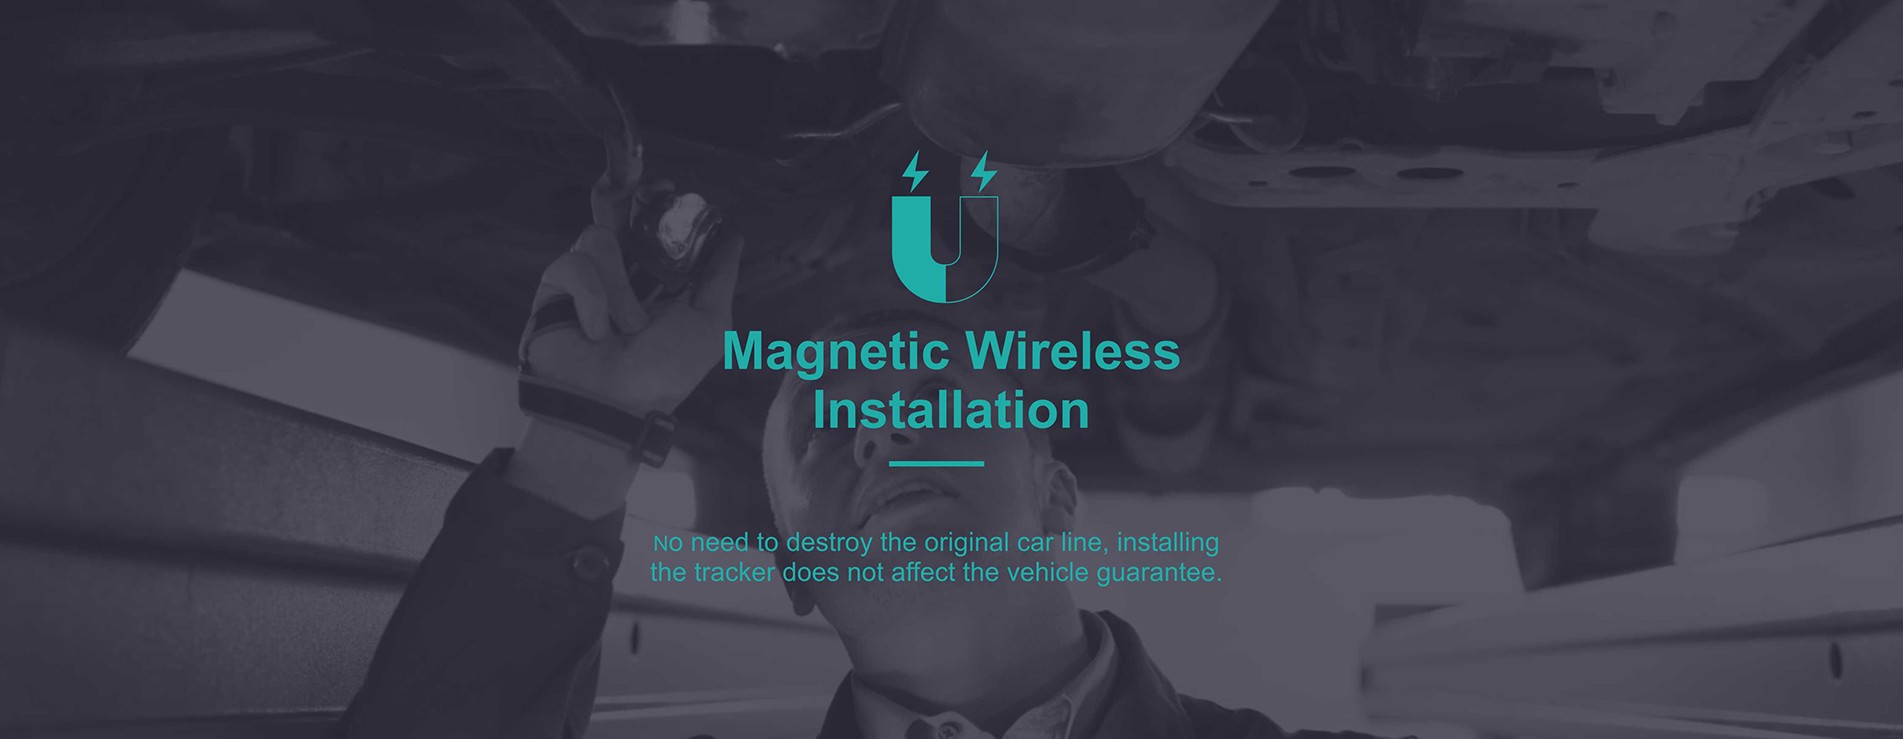 magnetic wireless installation